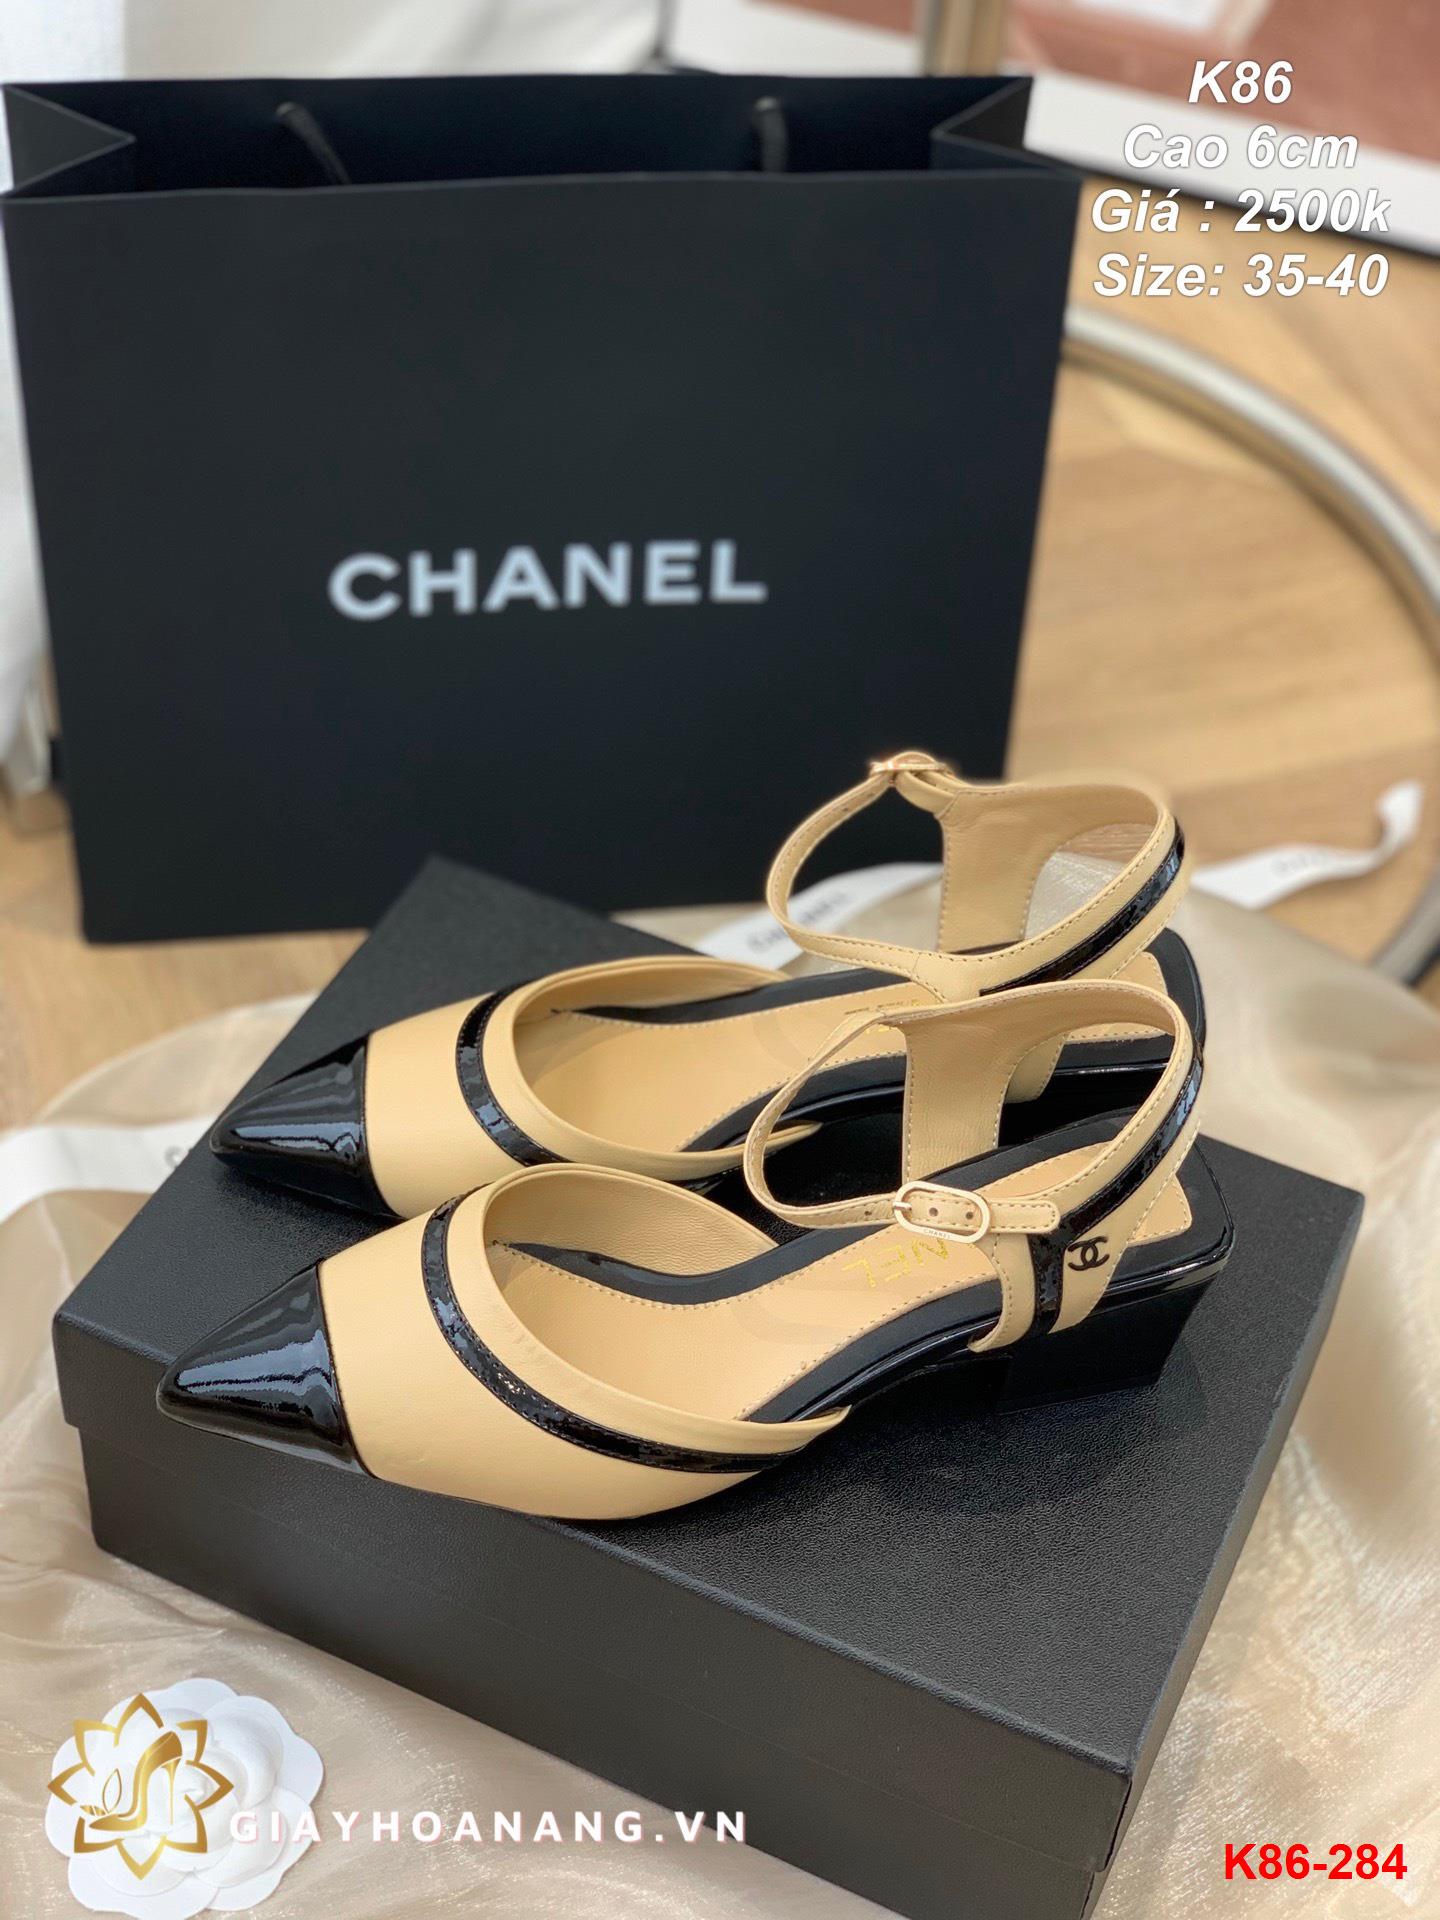 K86-284 Chanel sandal cao 6cm siêu cấp